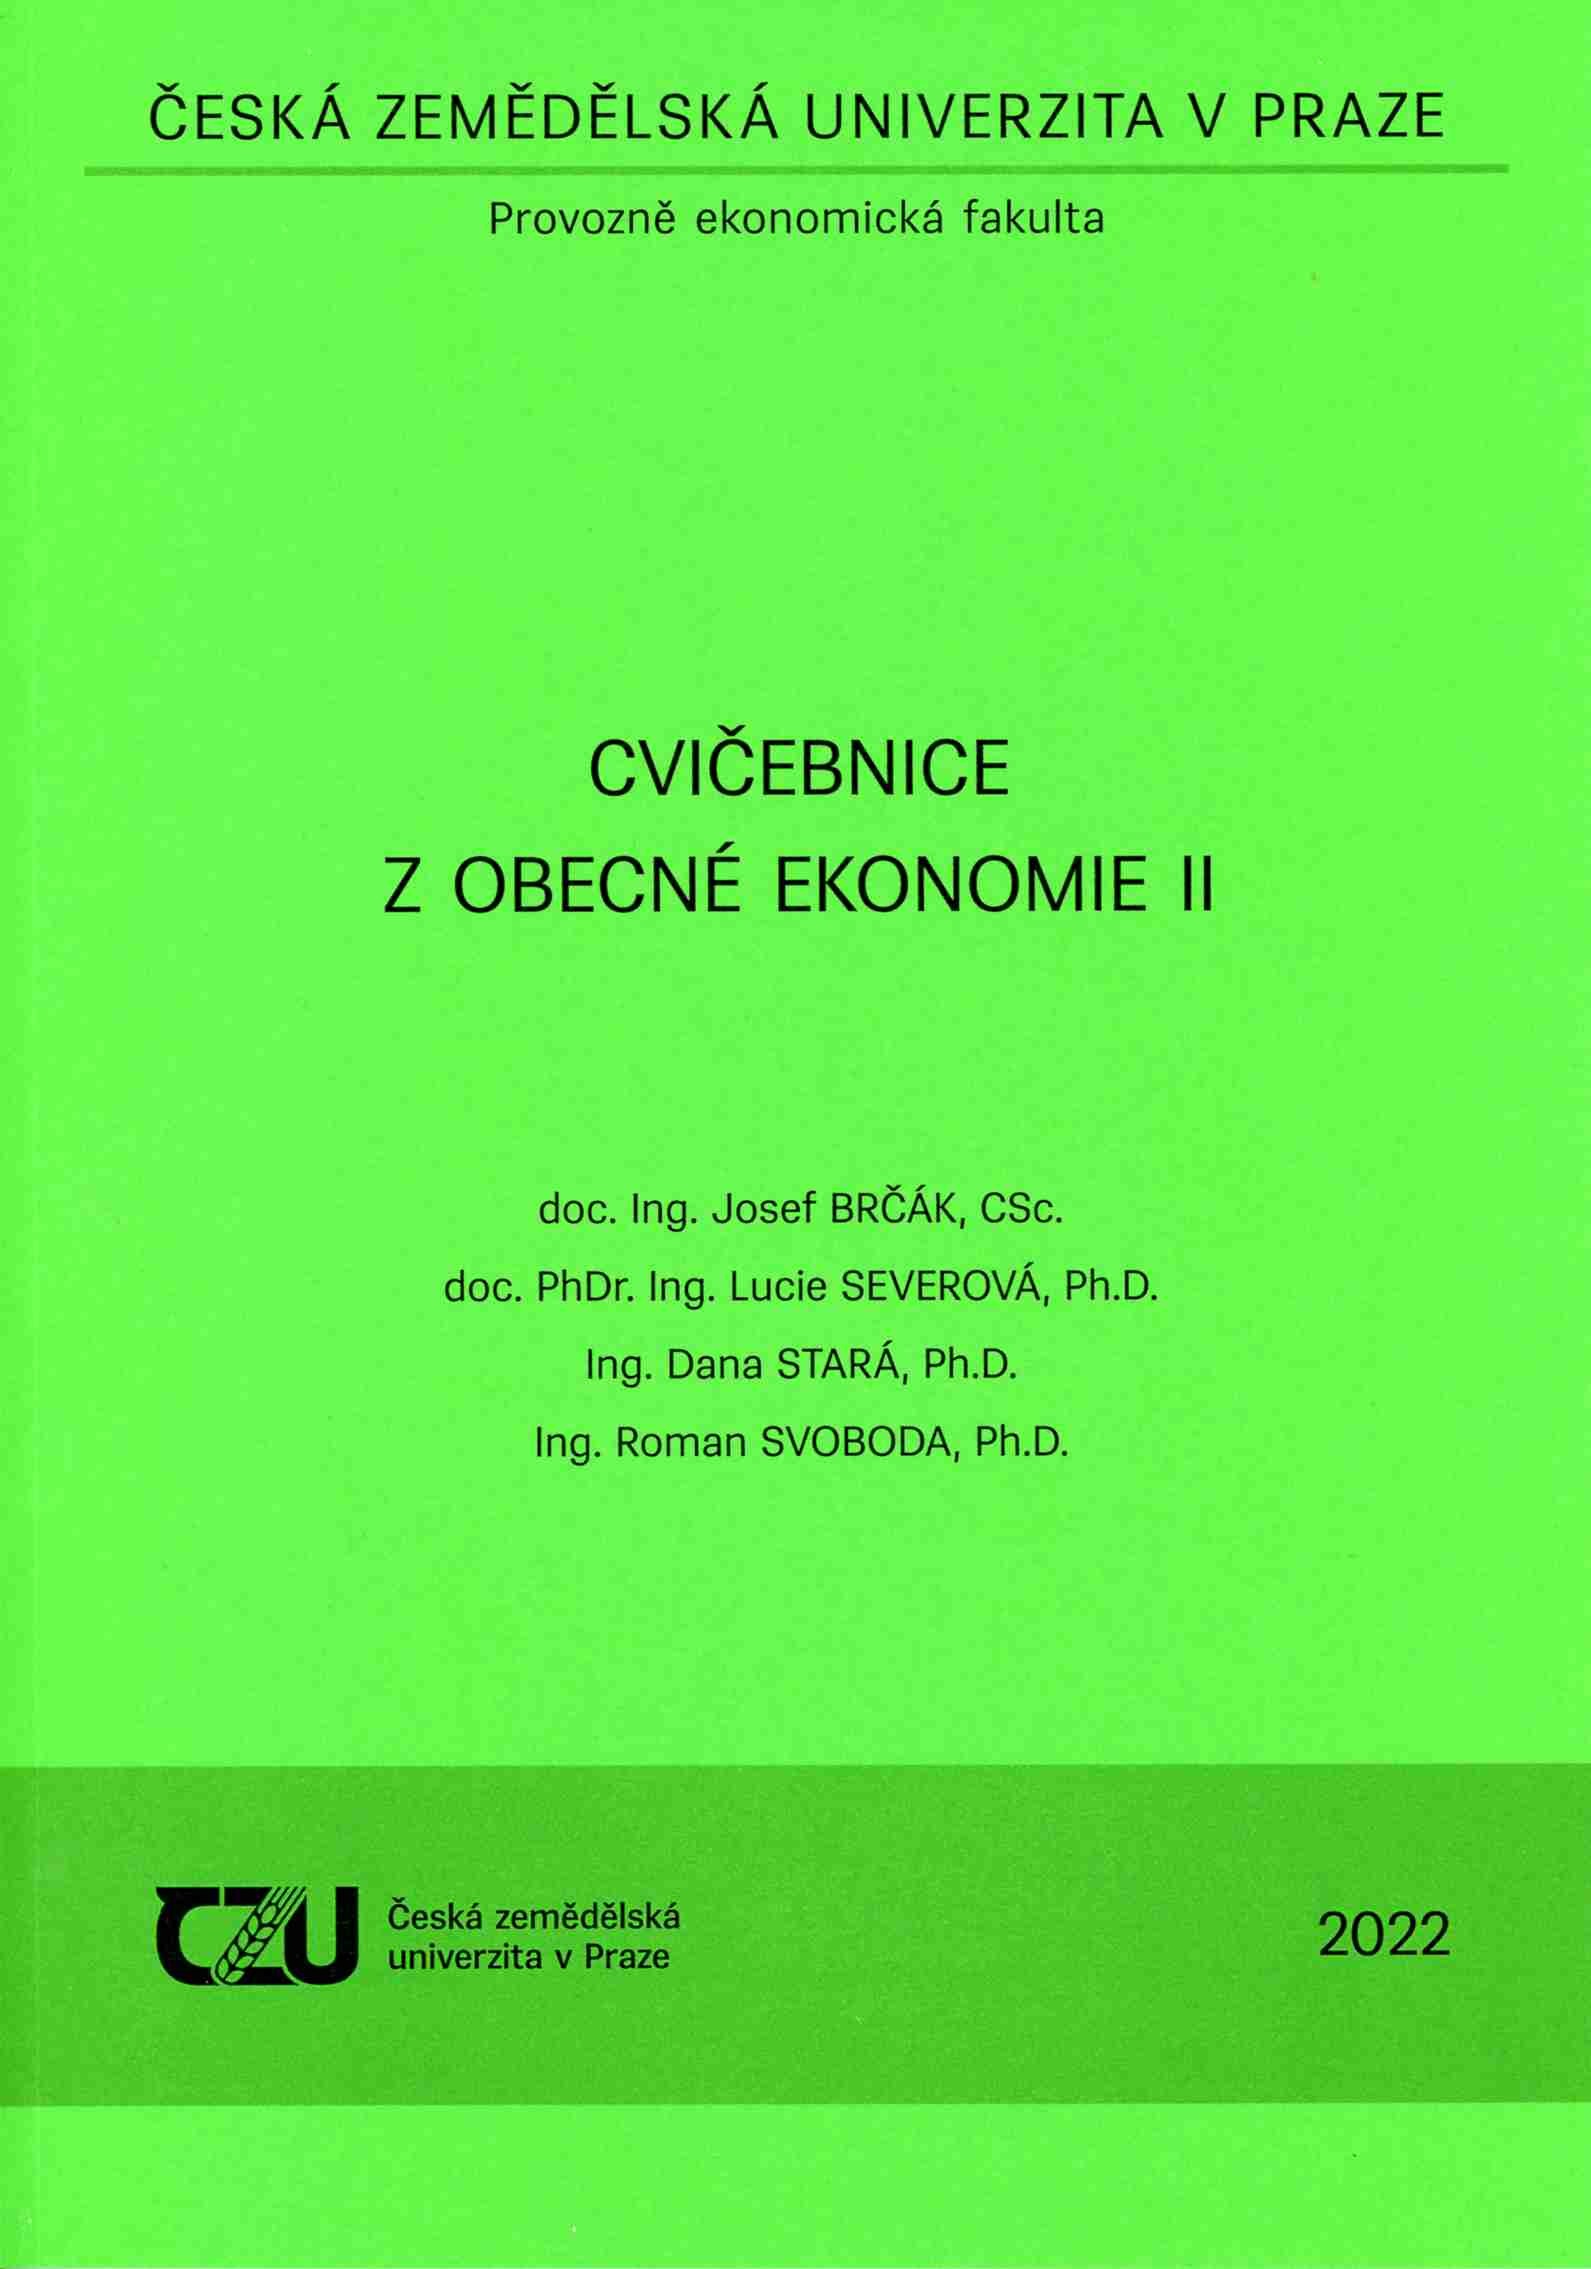 Cvičebnice z obecné ekonomie II (VSRR, HKS, SYI), 118